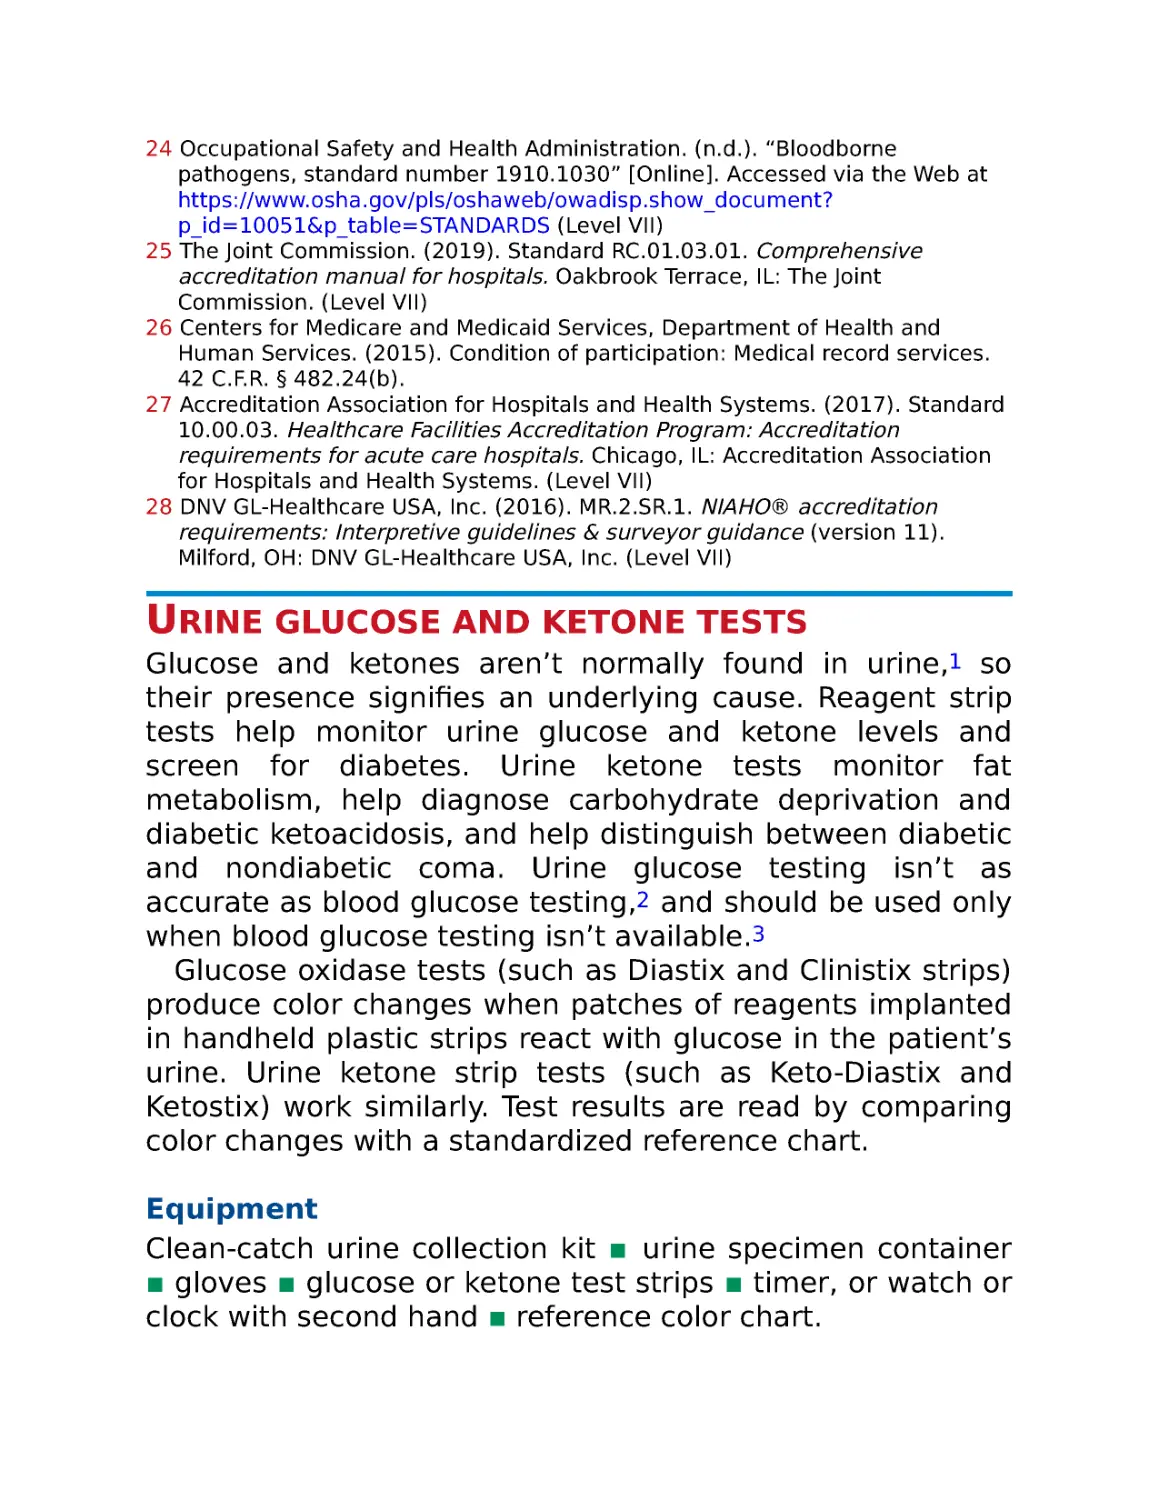 Urine glucose and ketone tests